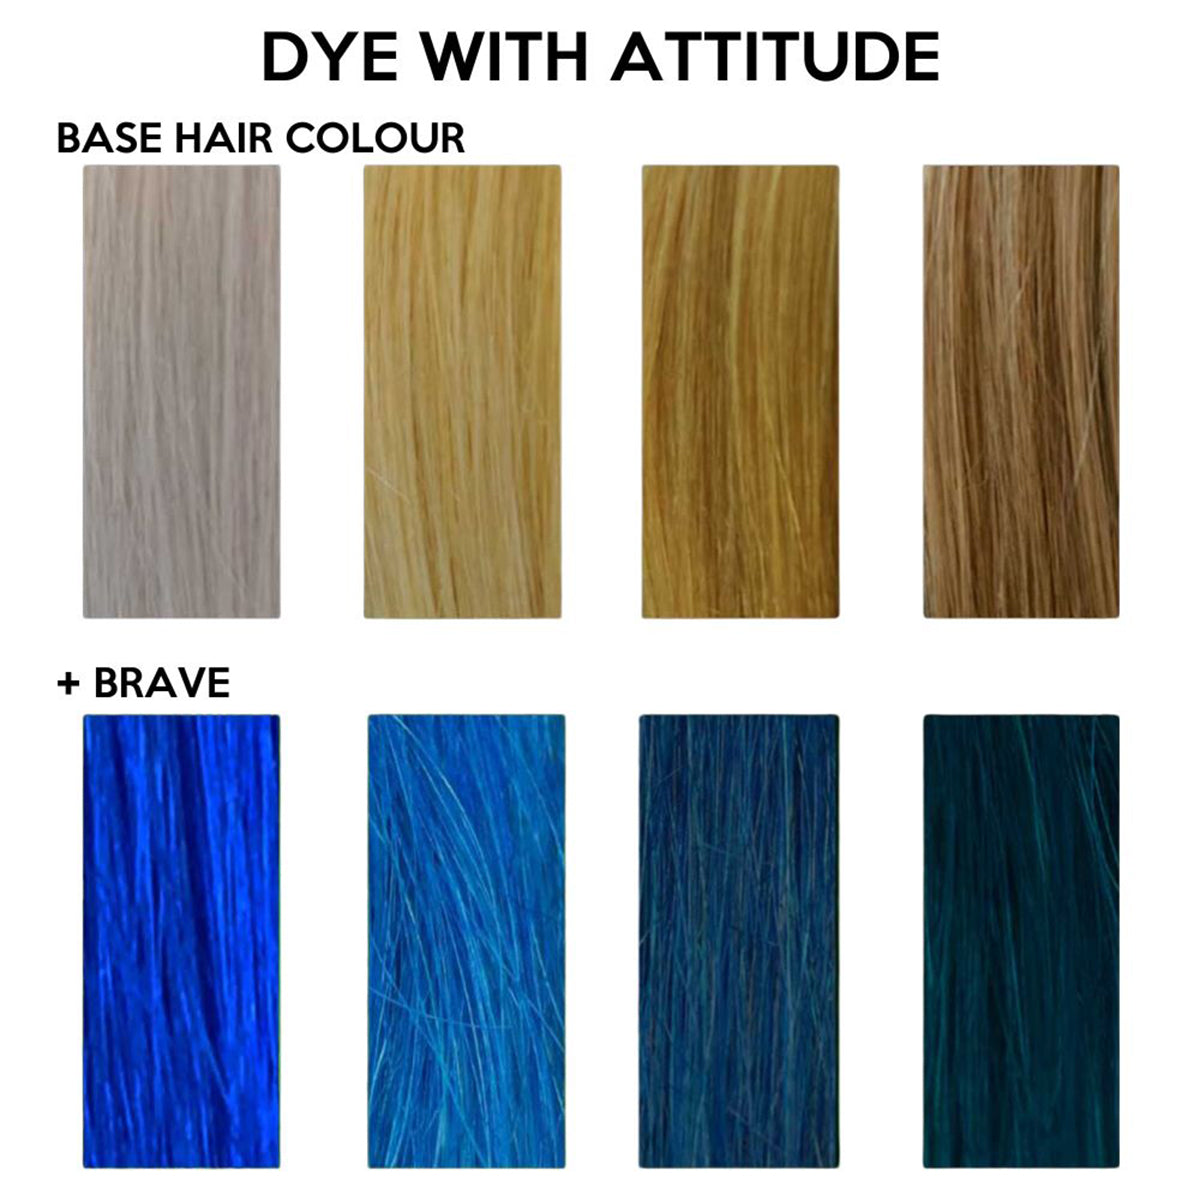 BRAVE BLUE - Farba do włosów Attitude - 135ml